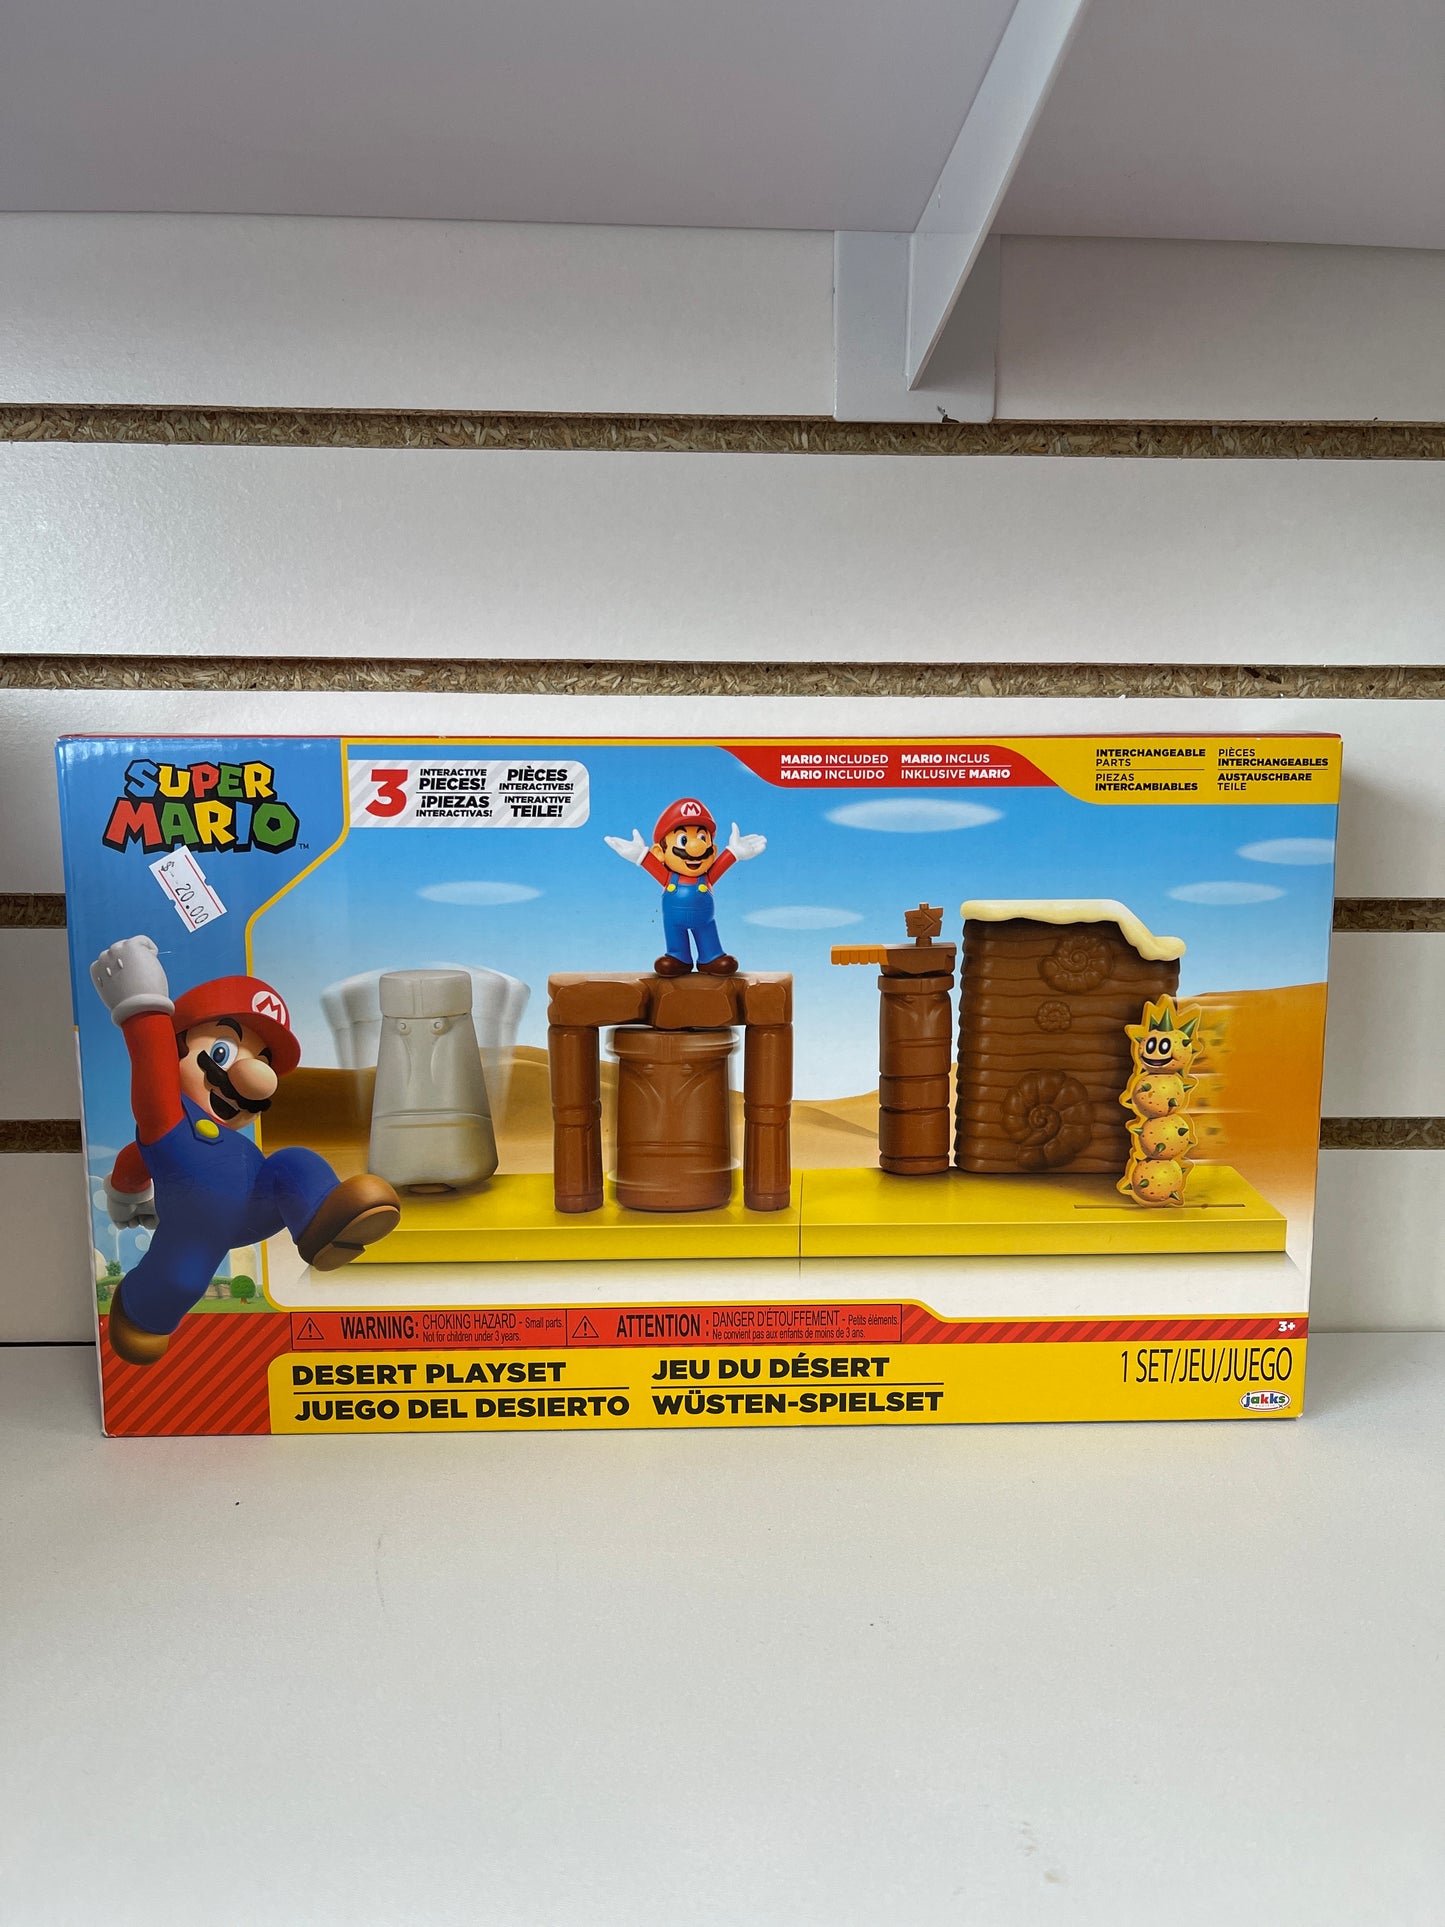 Super Mario Desert Playset